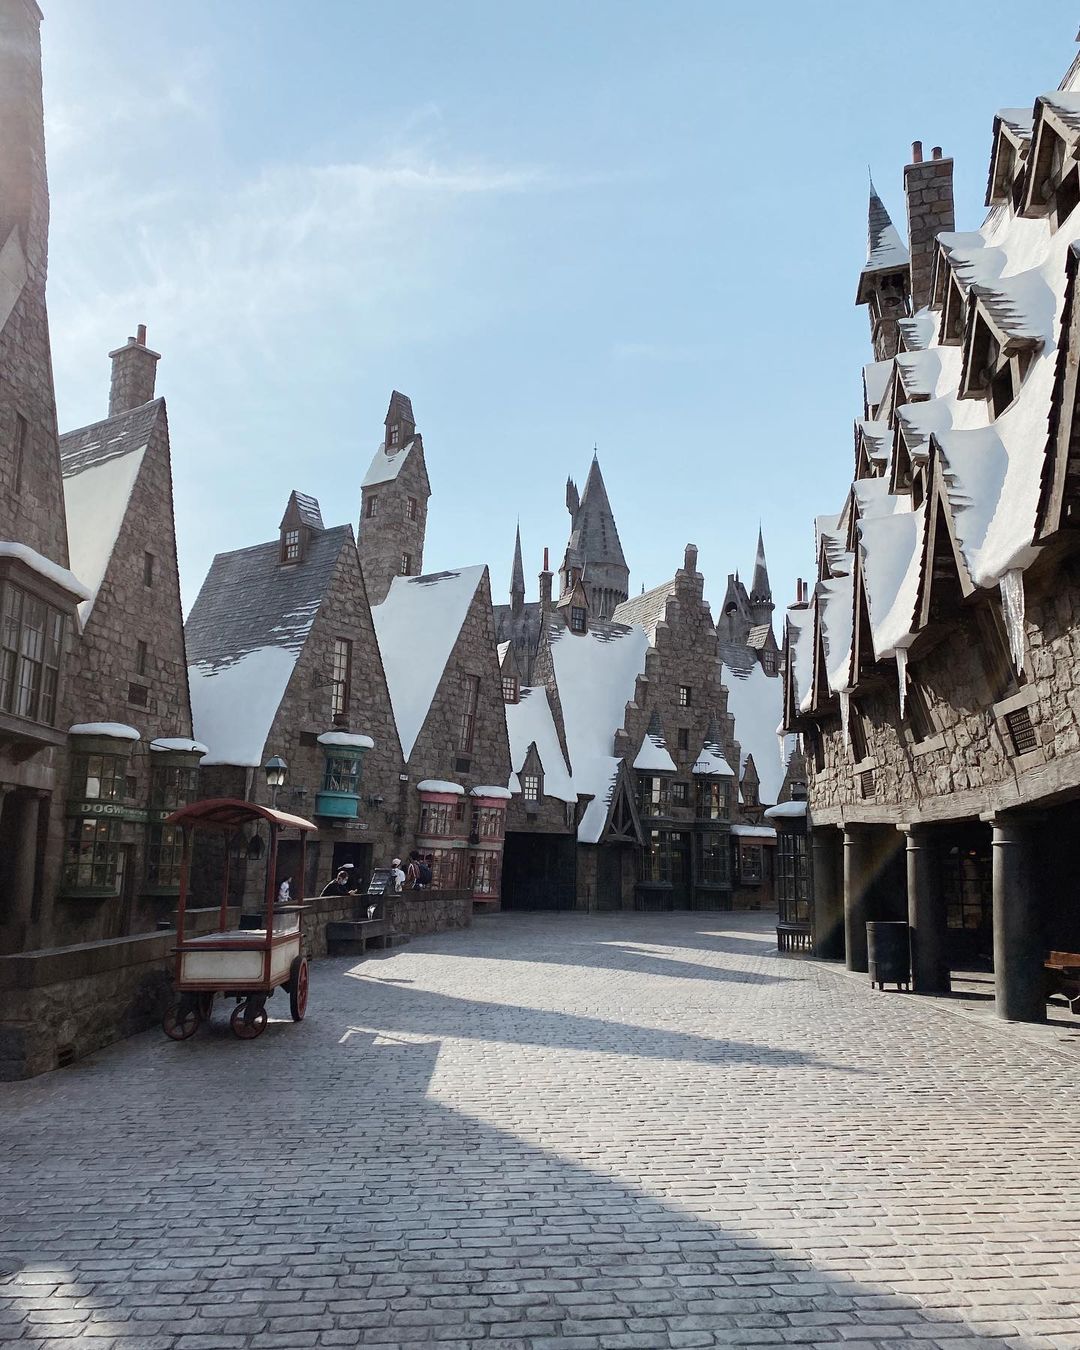 Hogsmeade - Harry Potter Area at Islands of Adventure